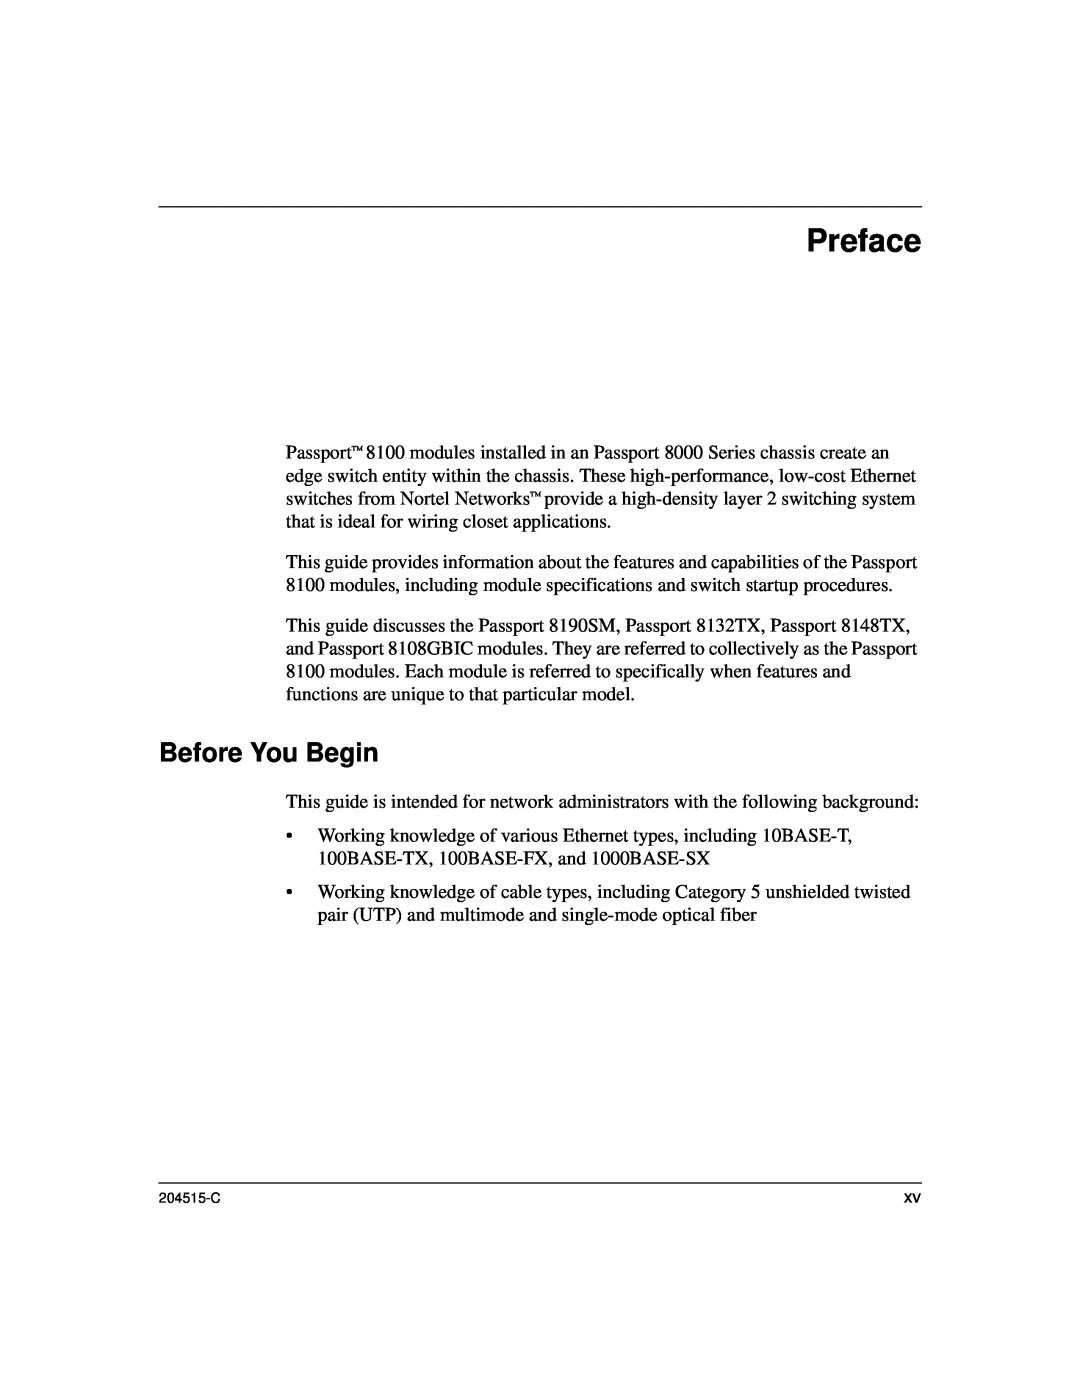 Nortel Networks 1000BASE-XD, 8100 manual Preface, Before You Begin 